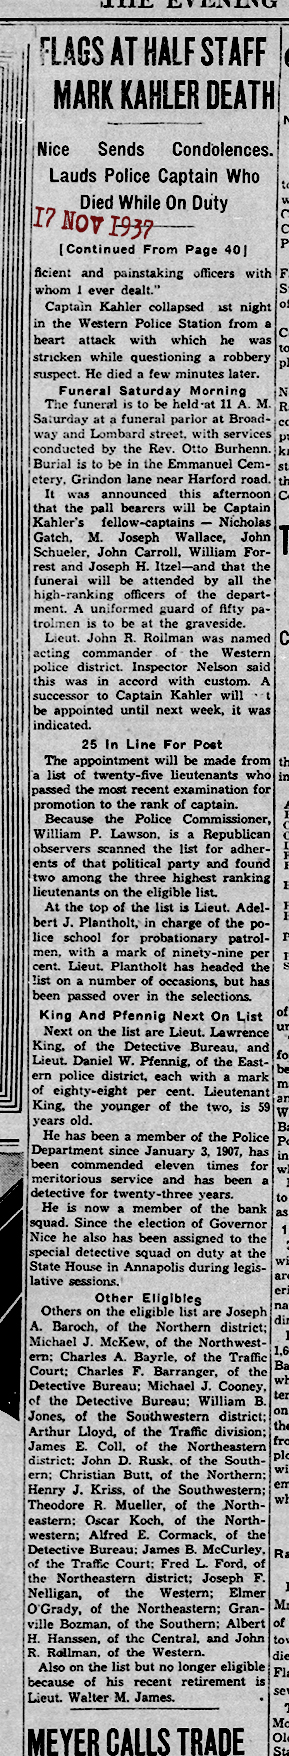 The Evening Sun Wed Nov 17 1937 172